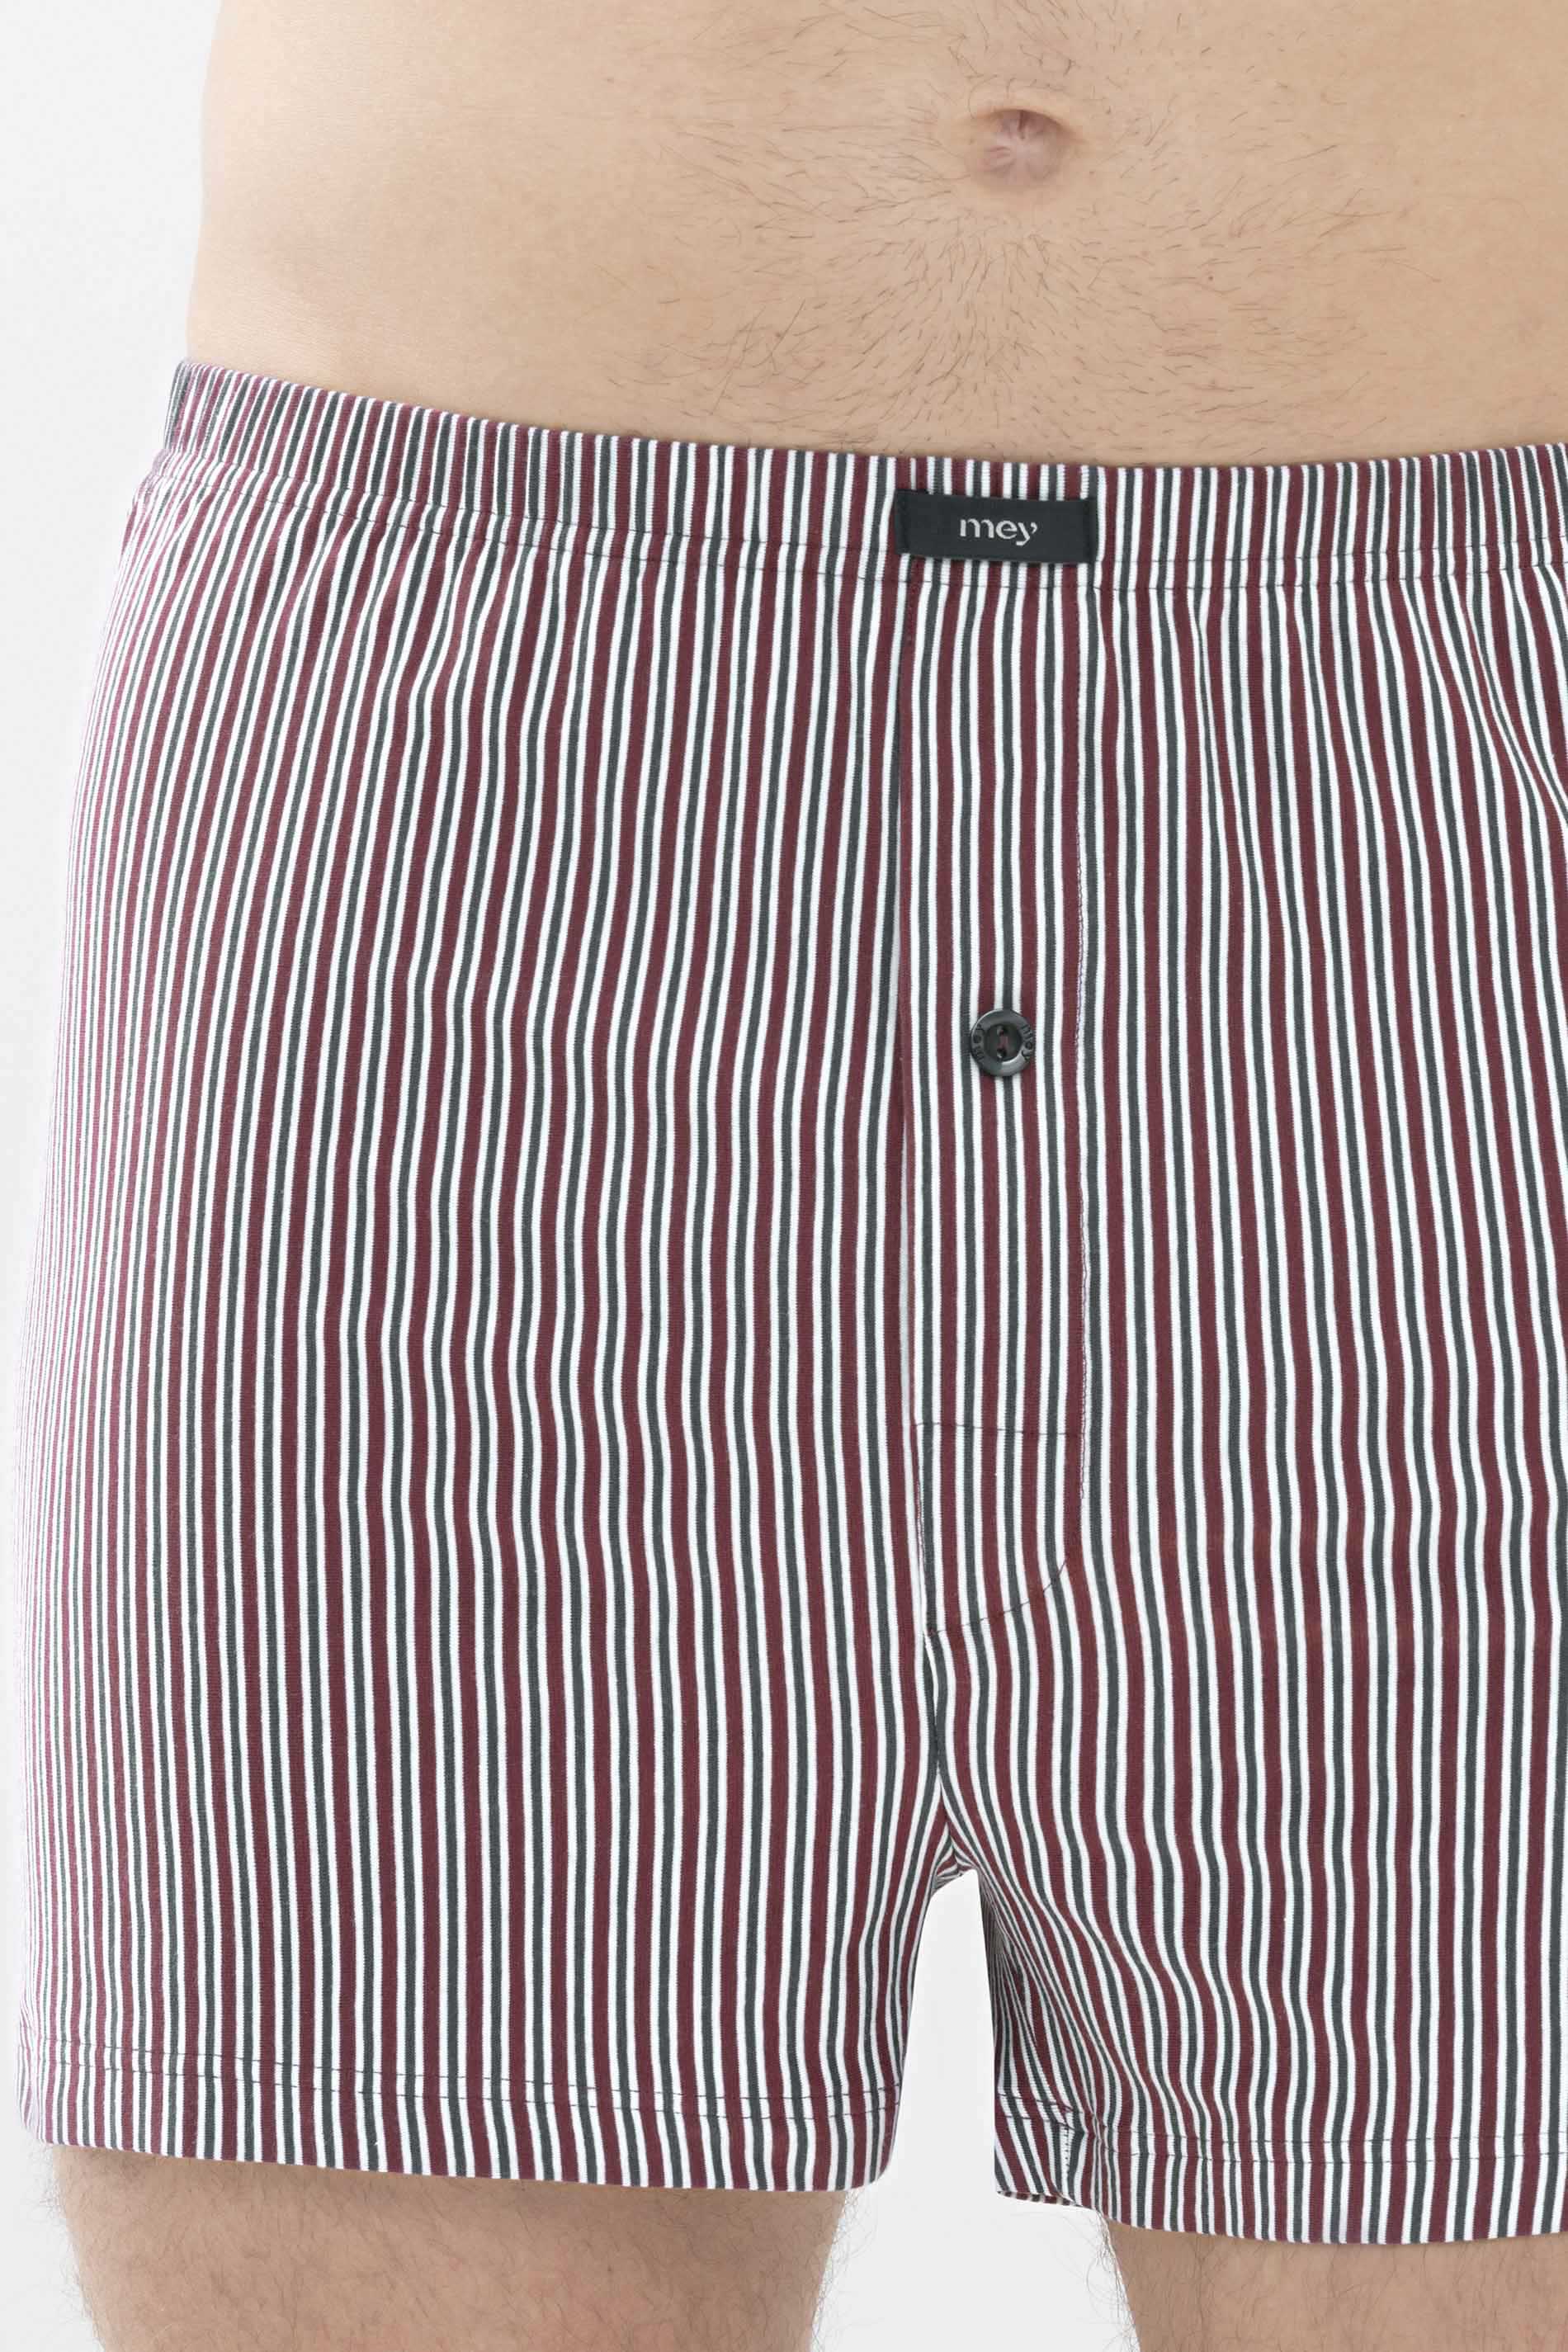 Boxershorts Oxblood Serie 3 Col Stripes Detailweergave 01 | mey®